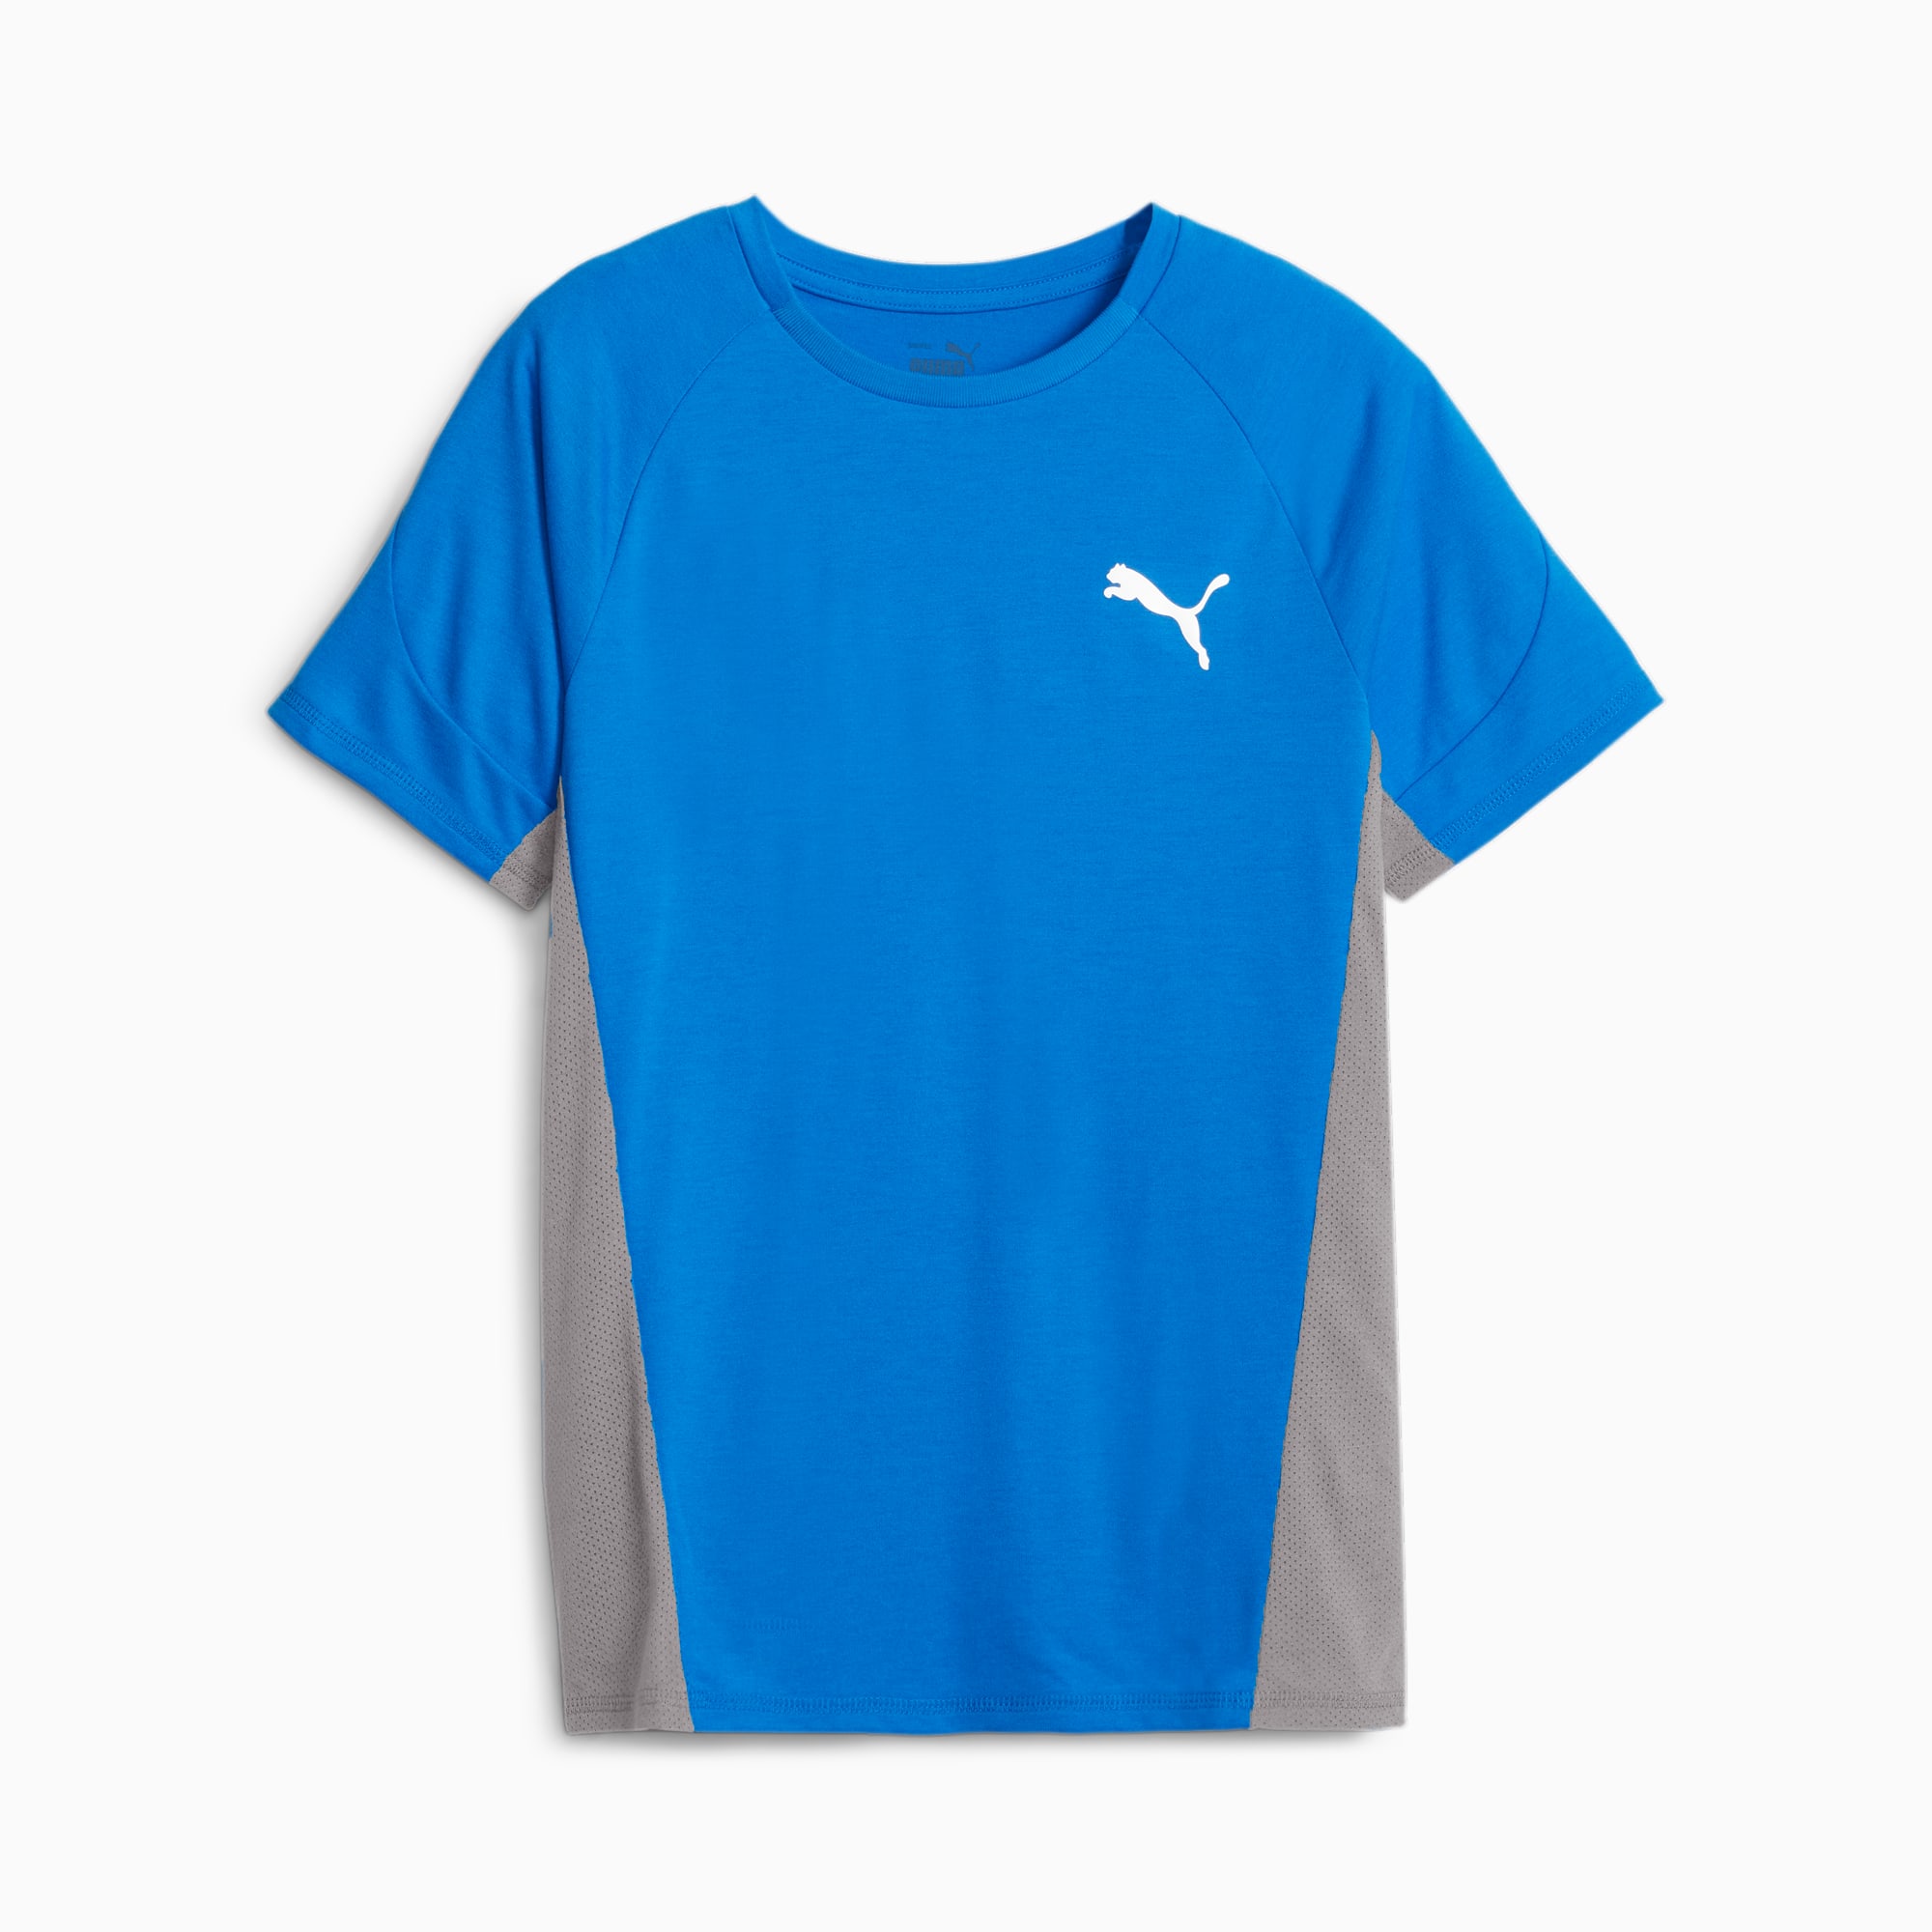 PUMA Evostripe Youth T-Shirt, Racing Blue, Size 116, Clothing